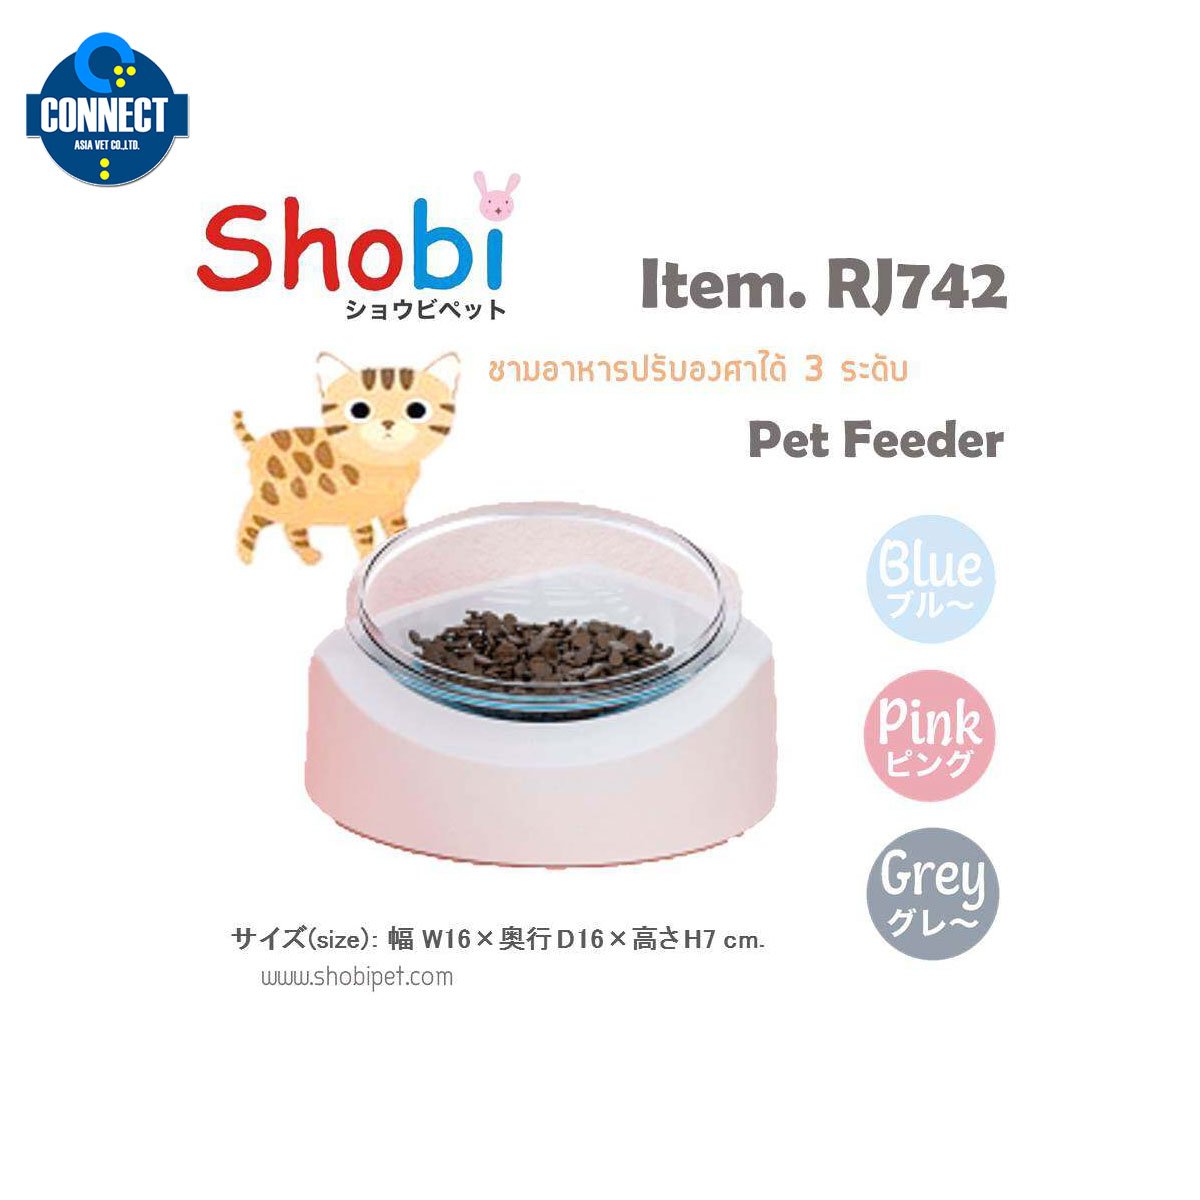 Shobi - Adjustable food bowl, cat food cup, cat feeding bowl, ceramic cup, pet food bowl - RJ742